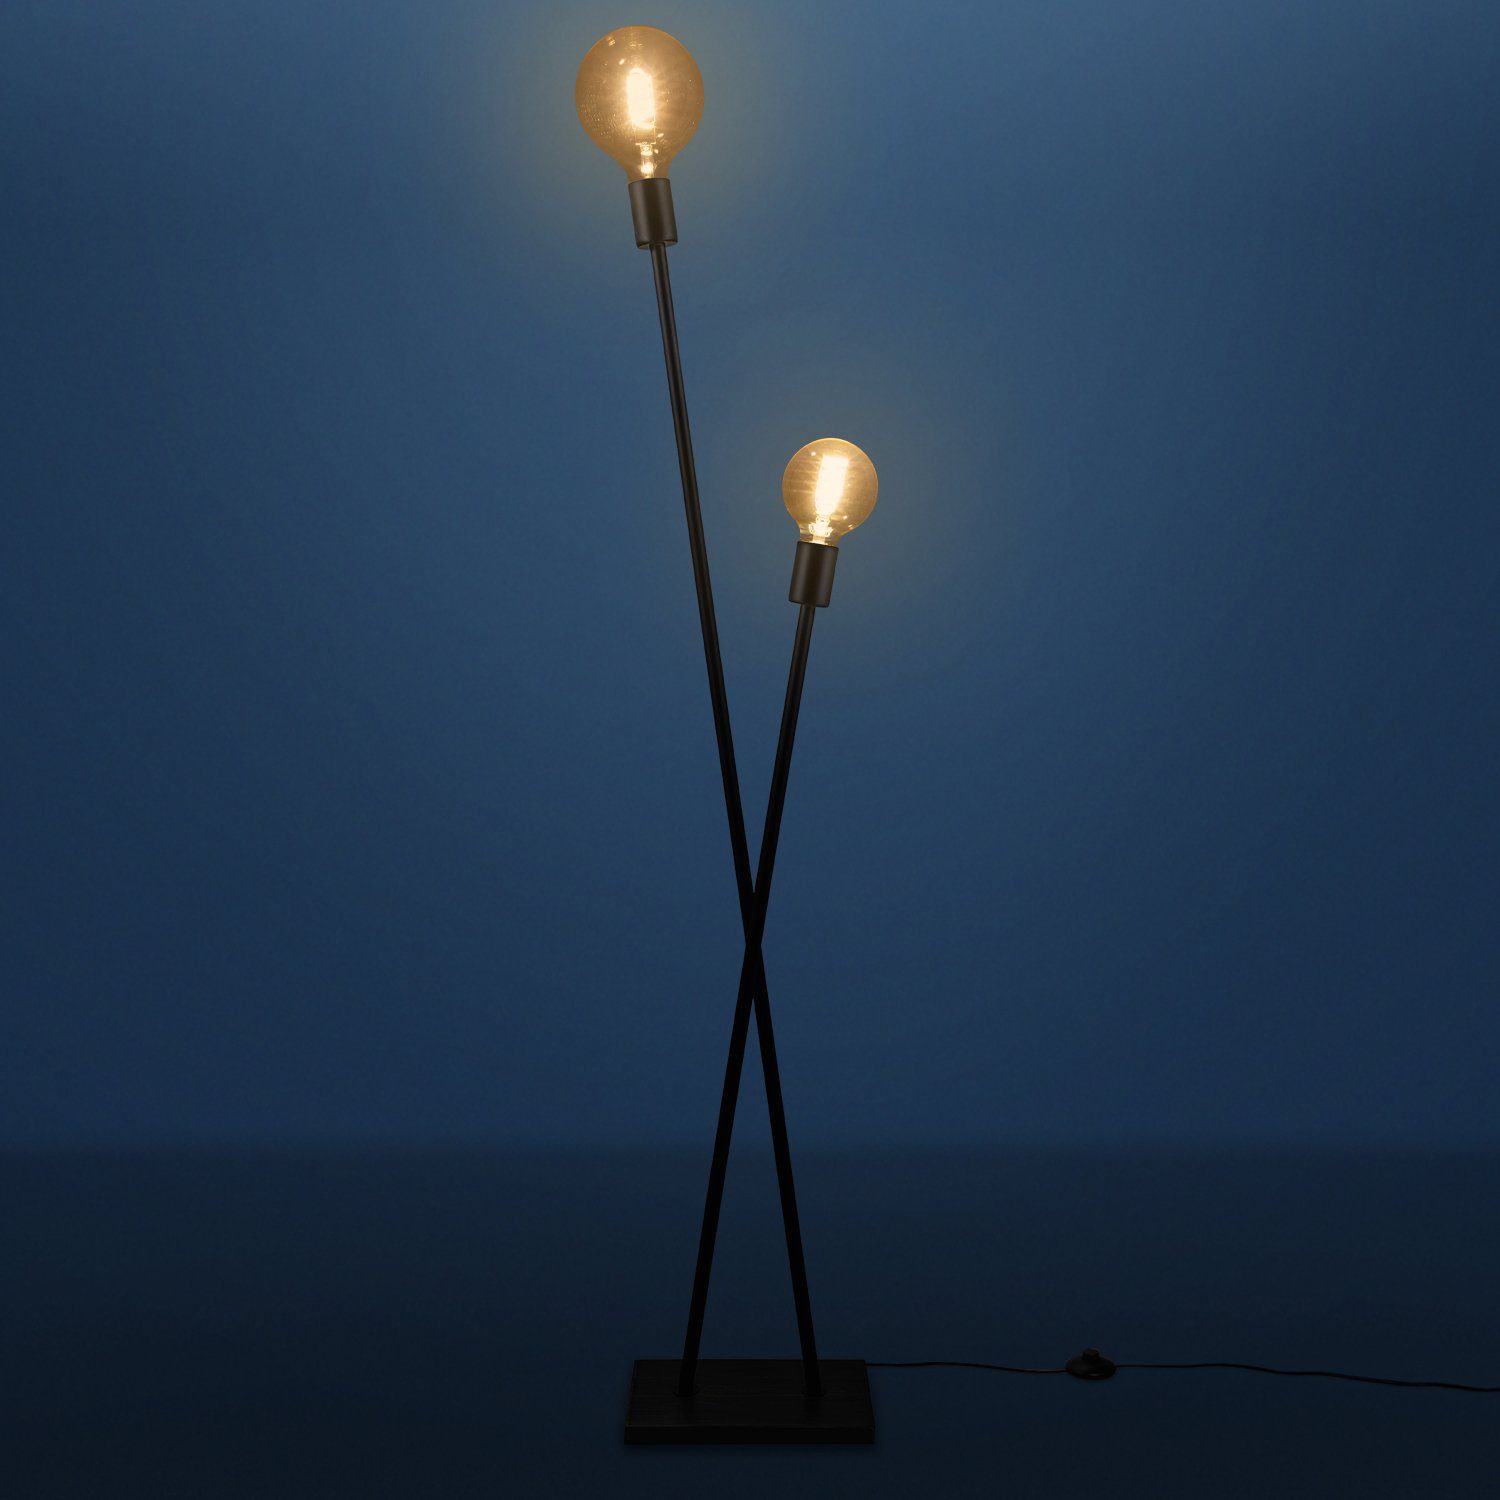 Lampe Leuchtmittel, ohne IKS, Design Retro Stehlampe Stehlampe Industrial Home E27 LED Vintage Paco Wohnzimmer